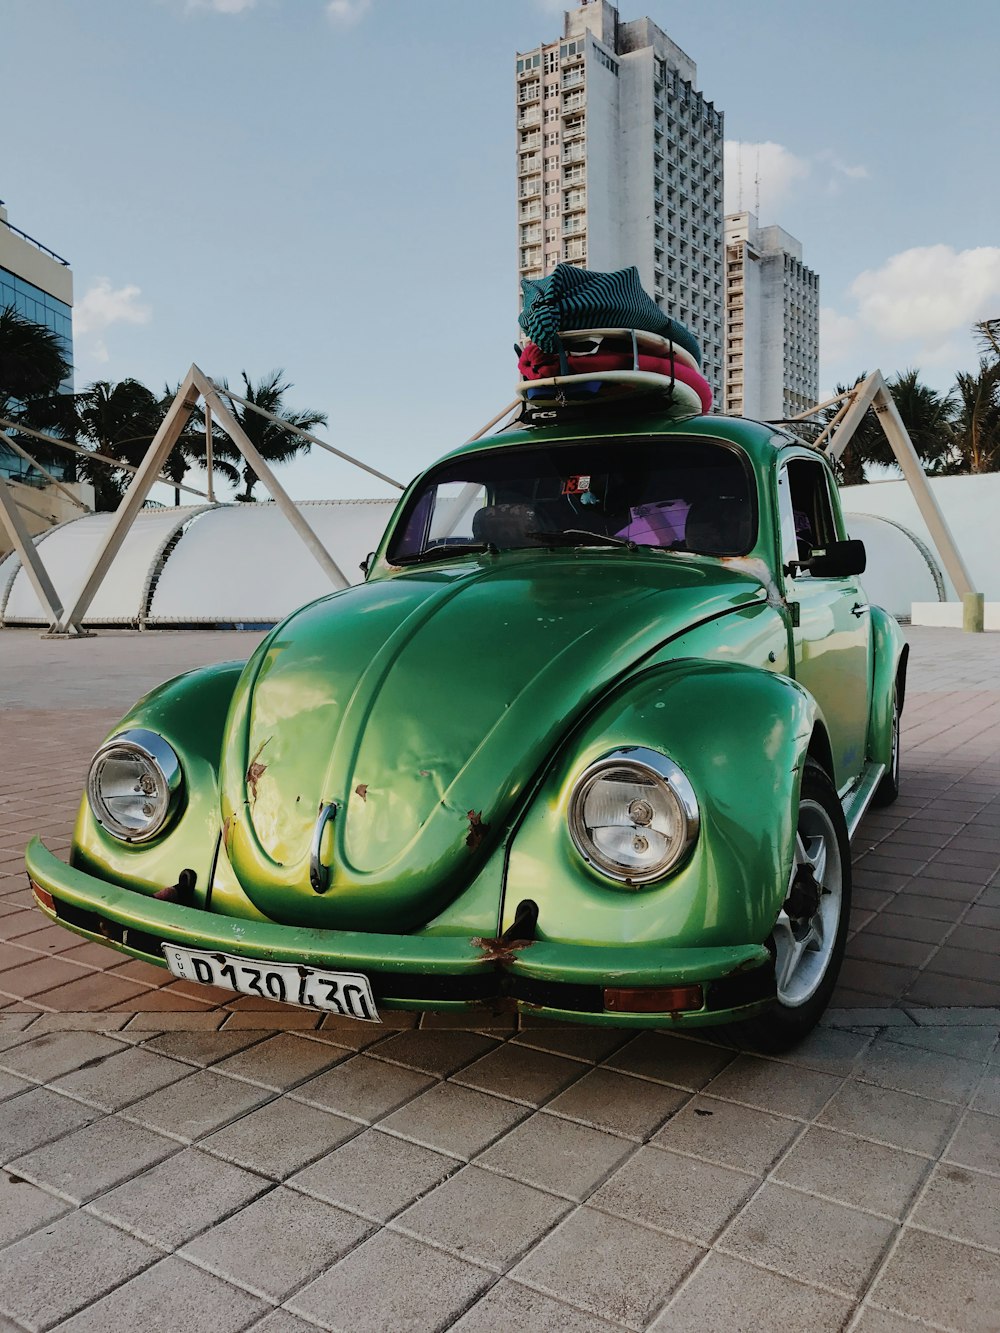 green volkswagen beetle parked on brown brick floor during daytime